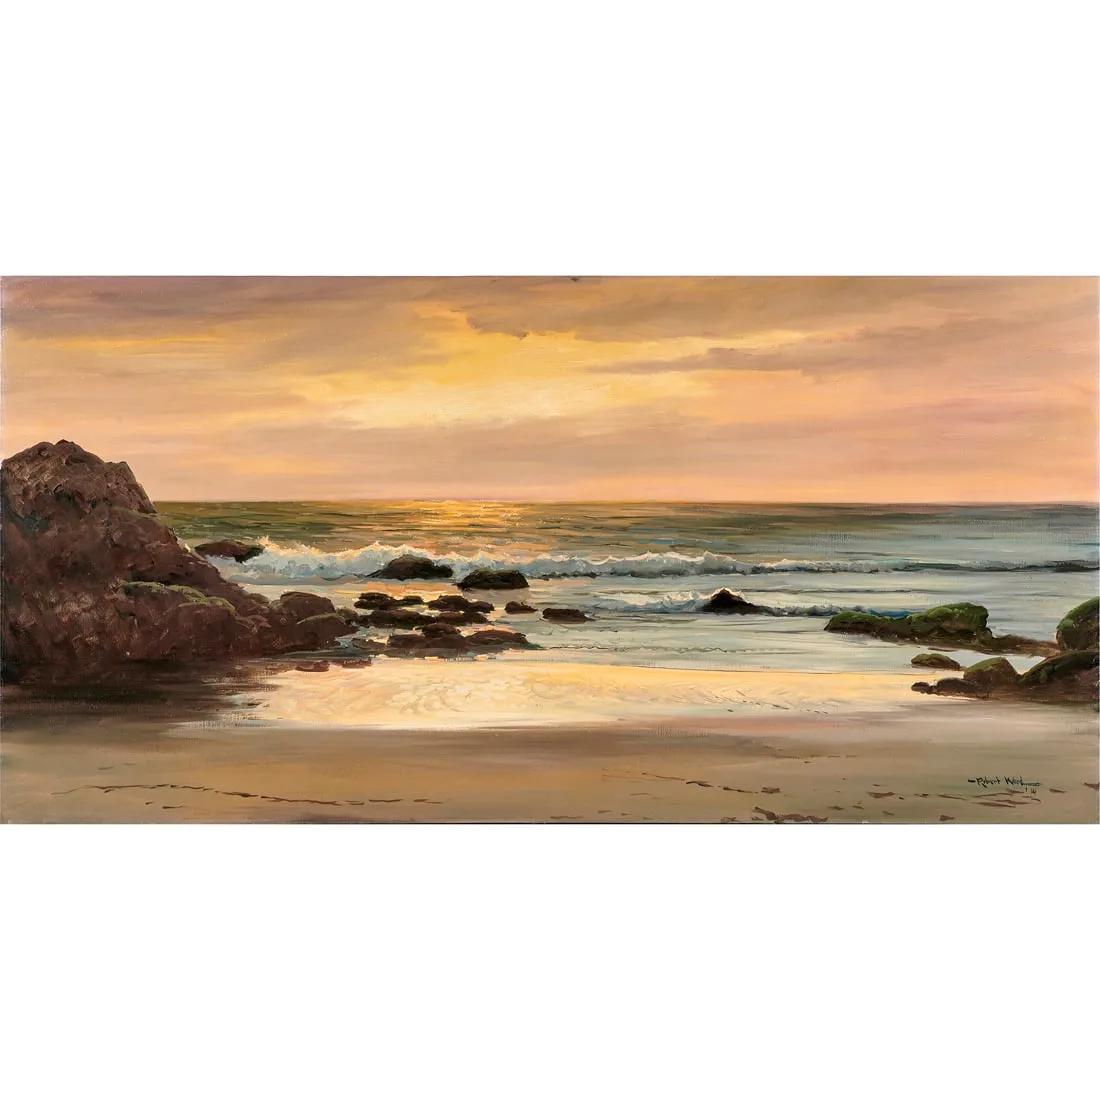 Landscape Painting Robert William Wood - Tableau de paysage marin de Robert Wood "Golden Splendor".